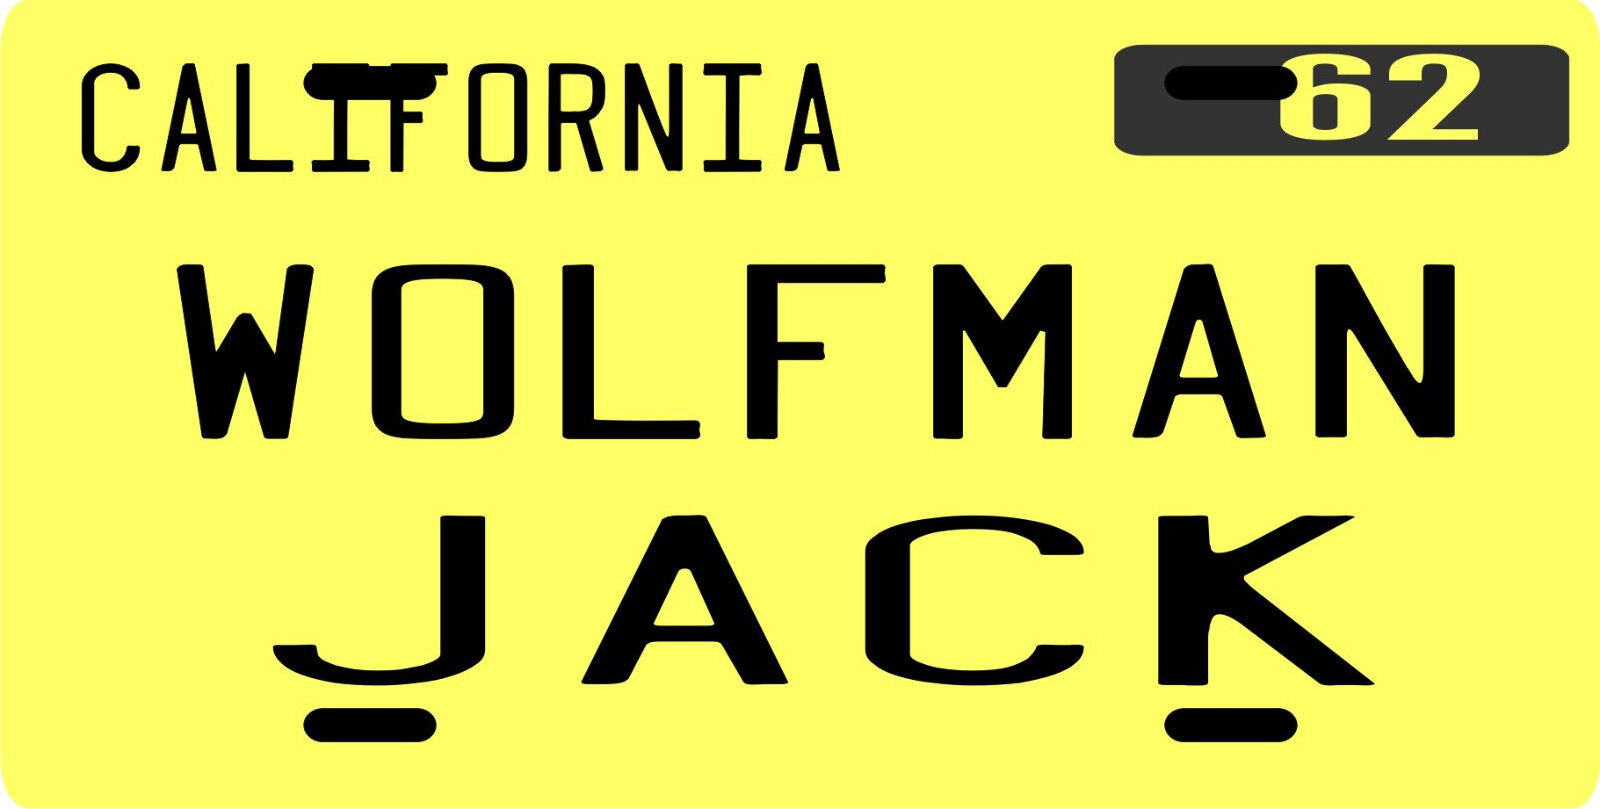 American Graffiti Wolfman Jack 1962 CA License plate